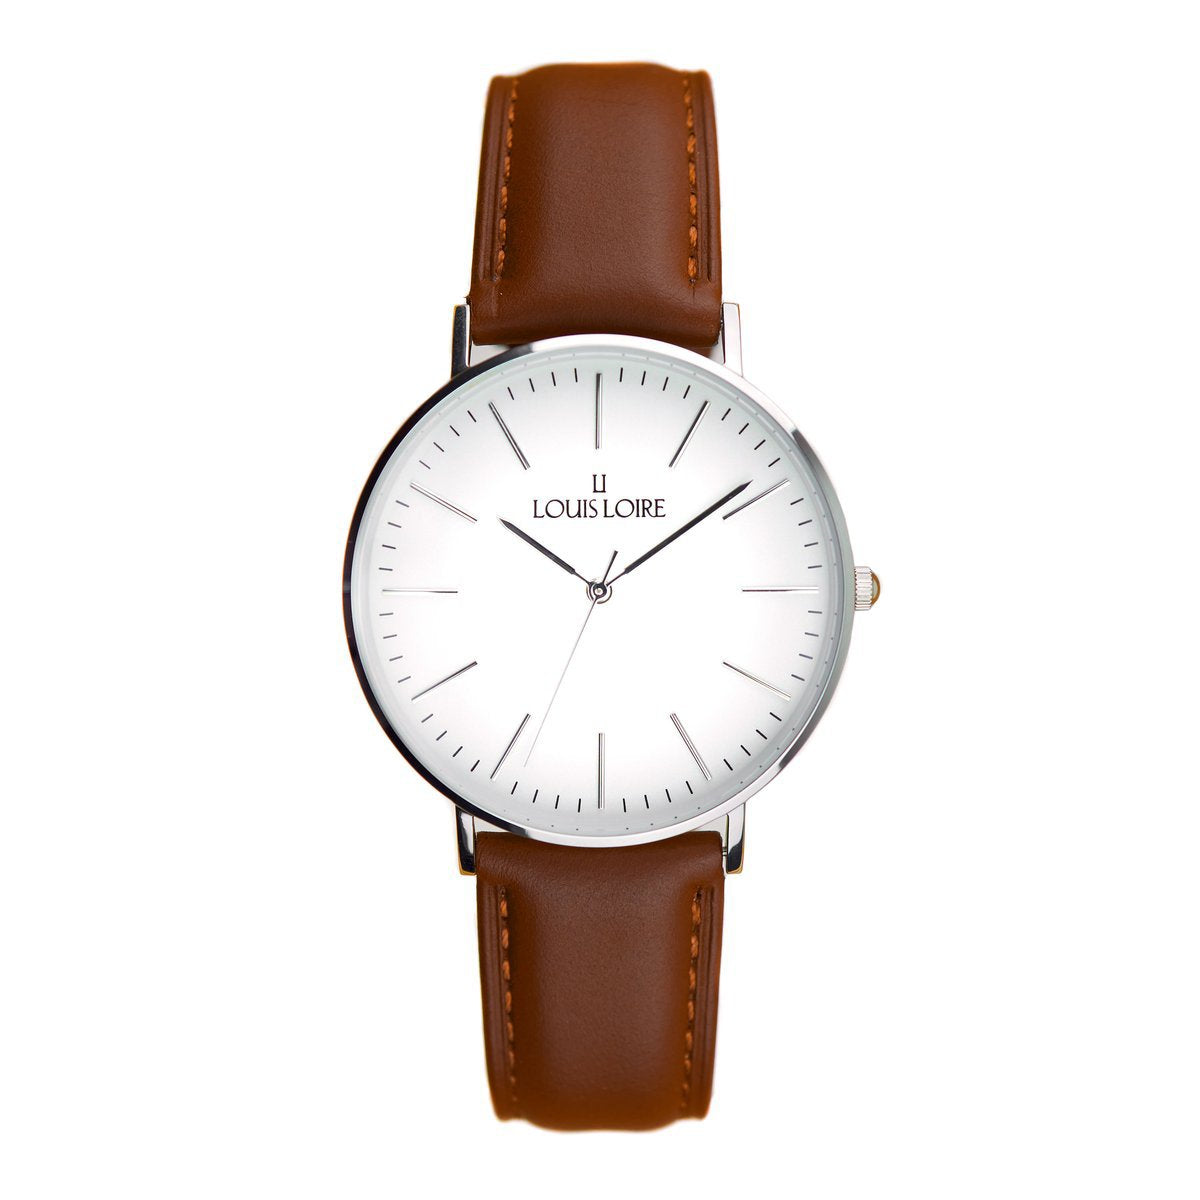 78 часов. Фирма изготавливающая часы Луар. Loire часы цена.